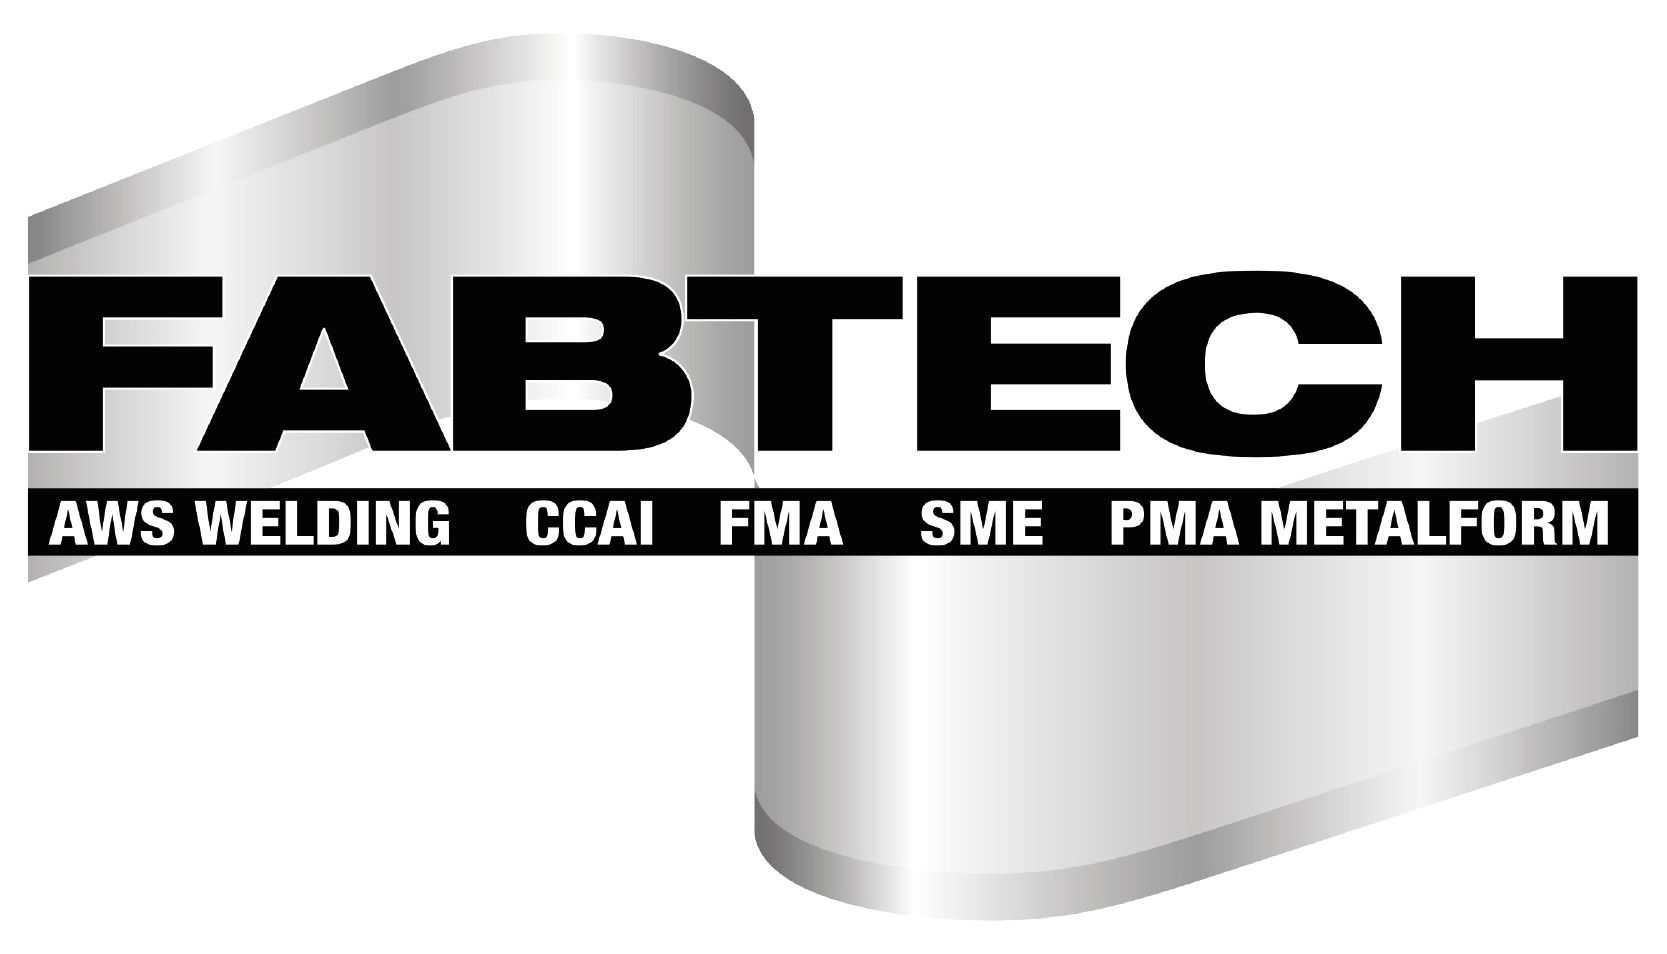 DANOBAT sheet metal solutions to exhibiti at FABTECH 2015 in Monterrey